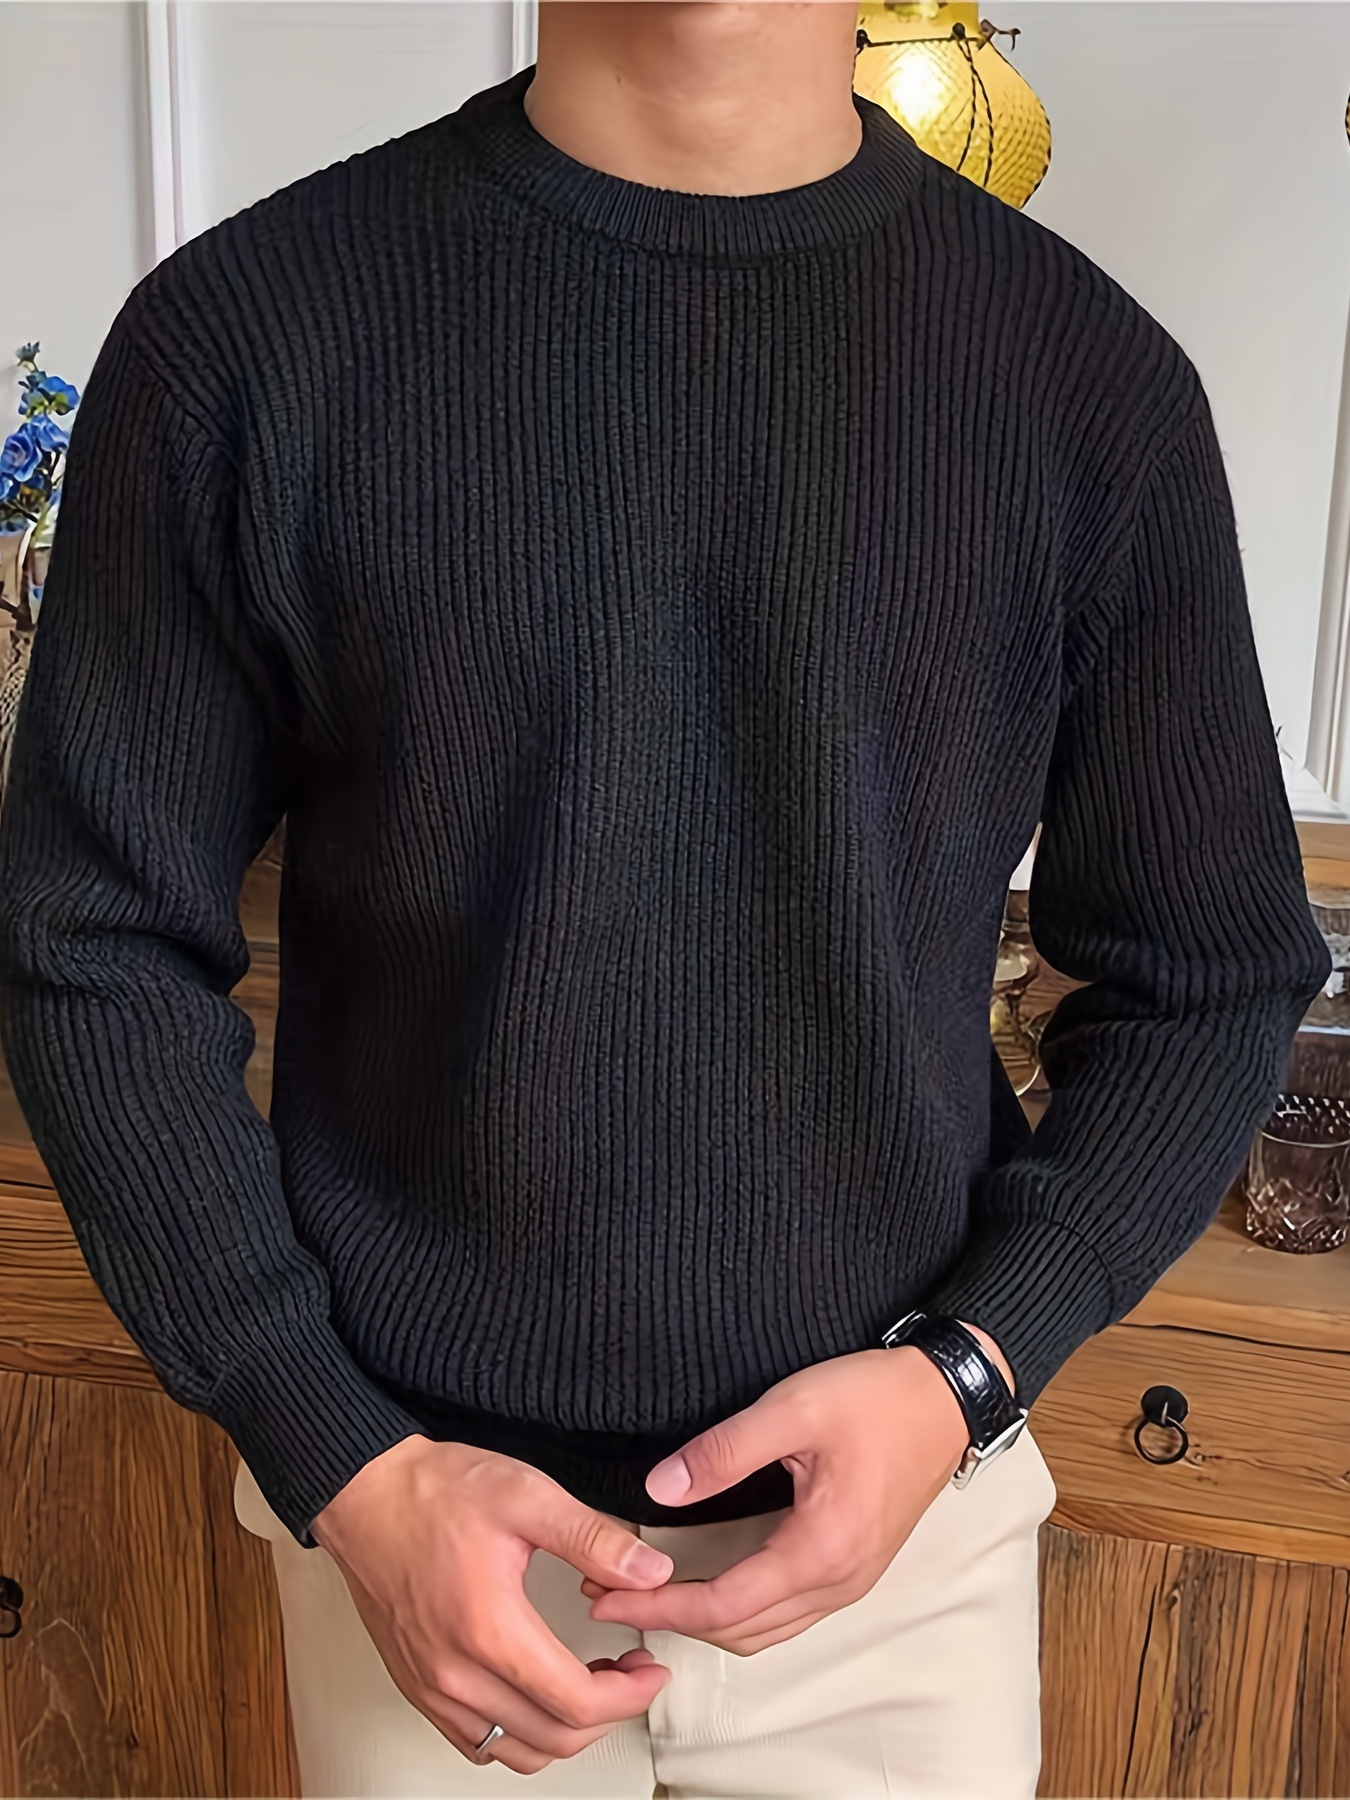 Men's Crew Neck Sweaters, Pullovers